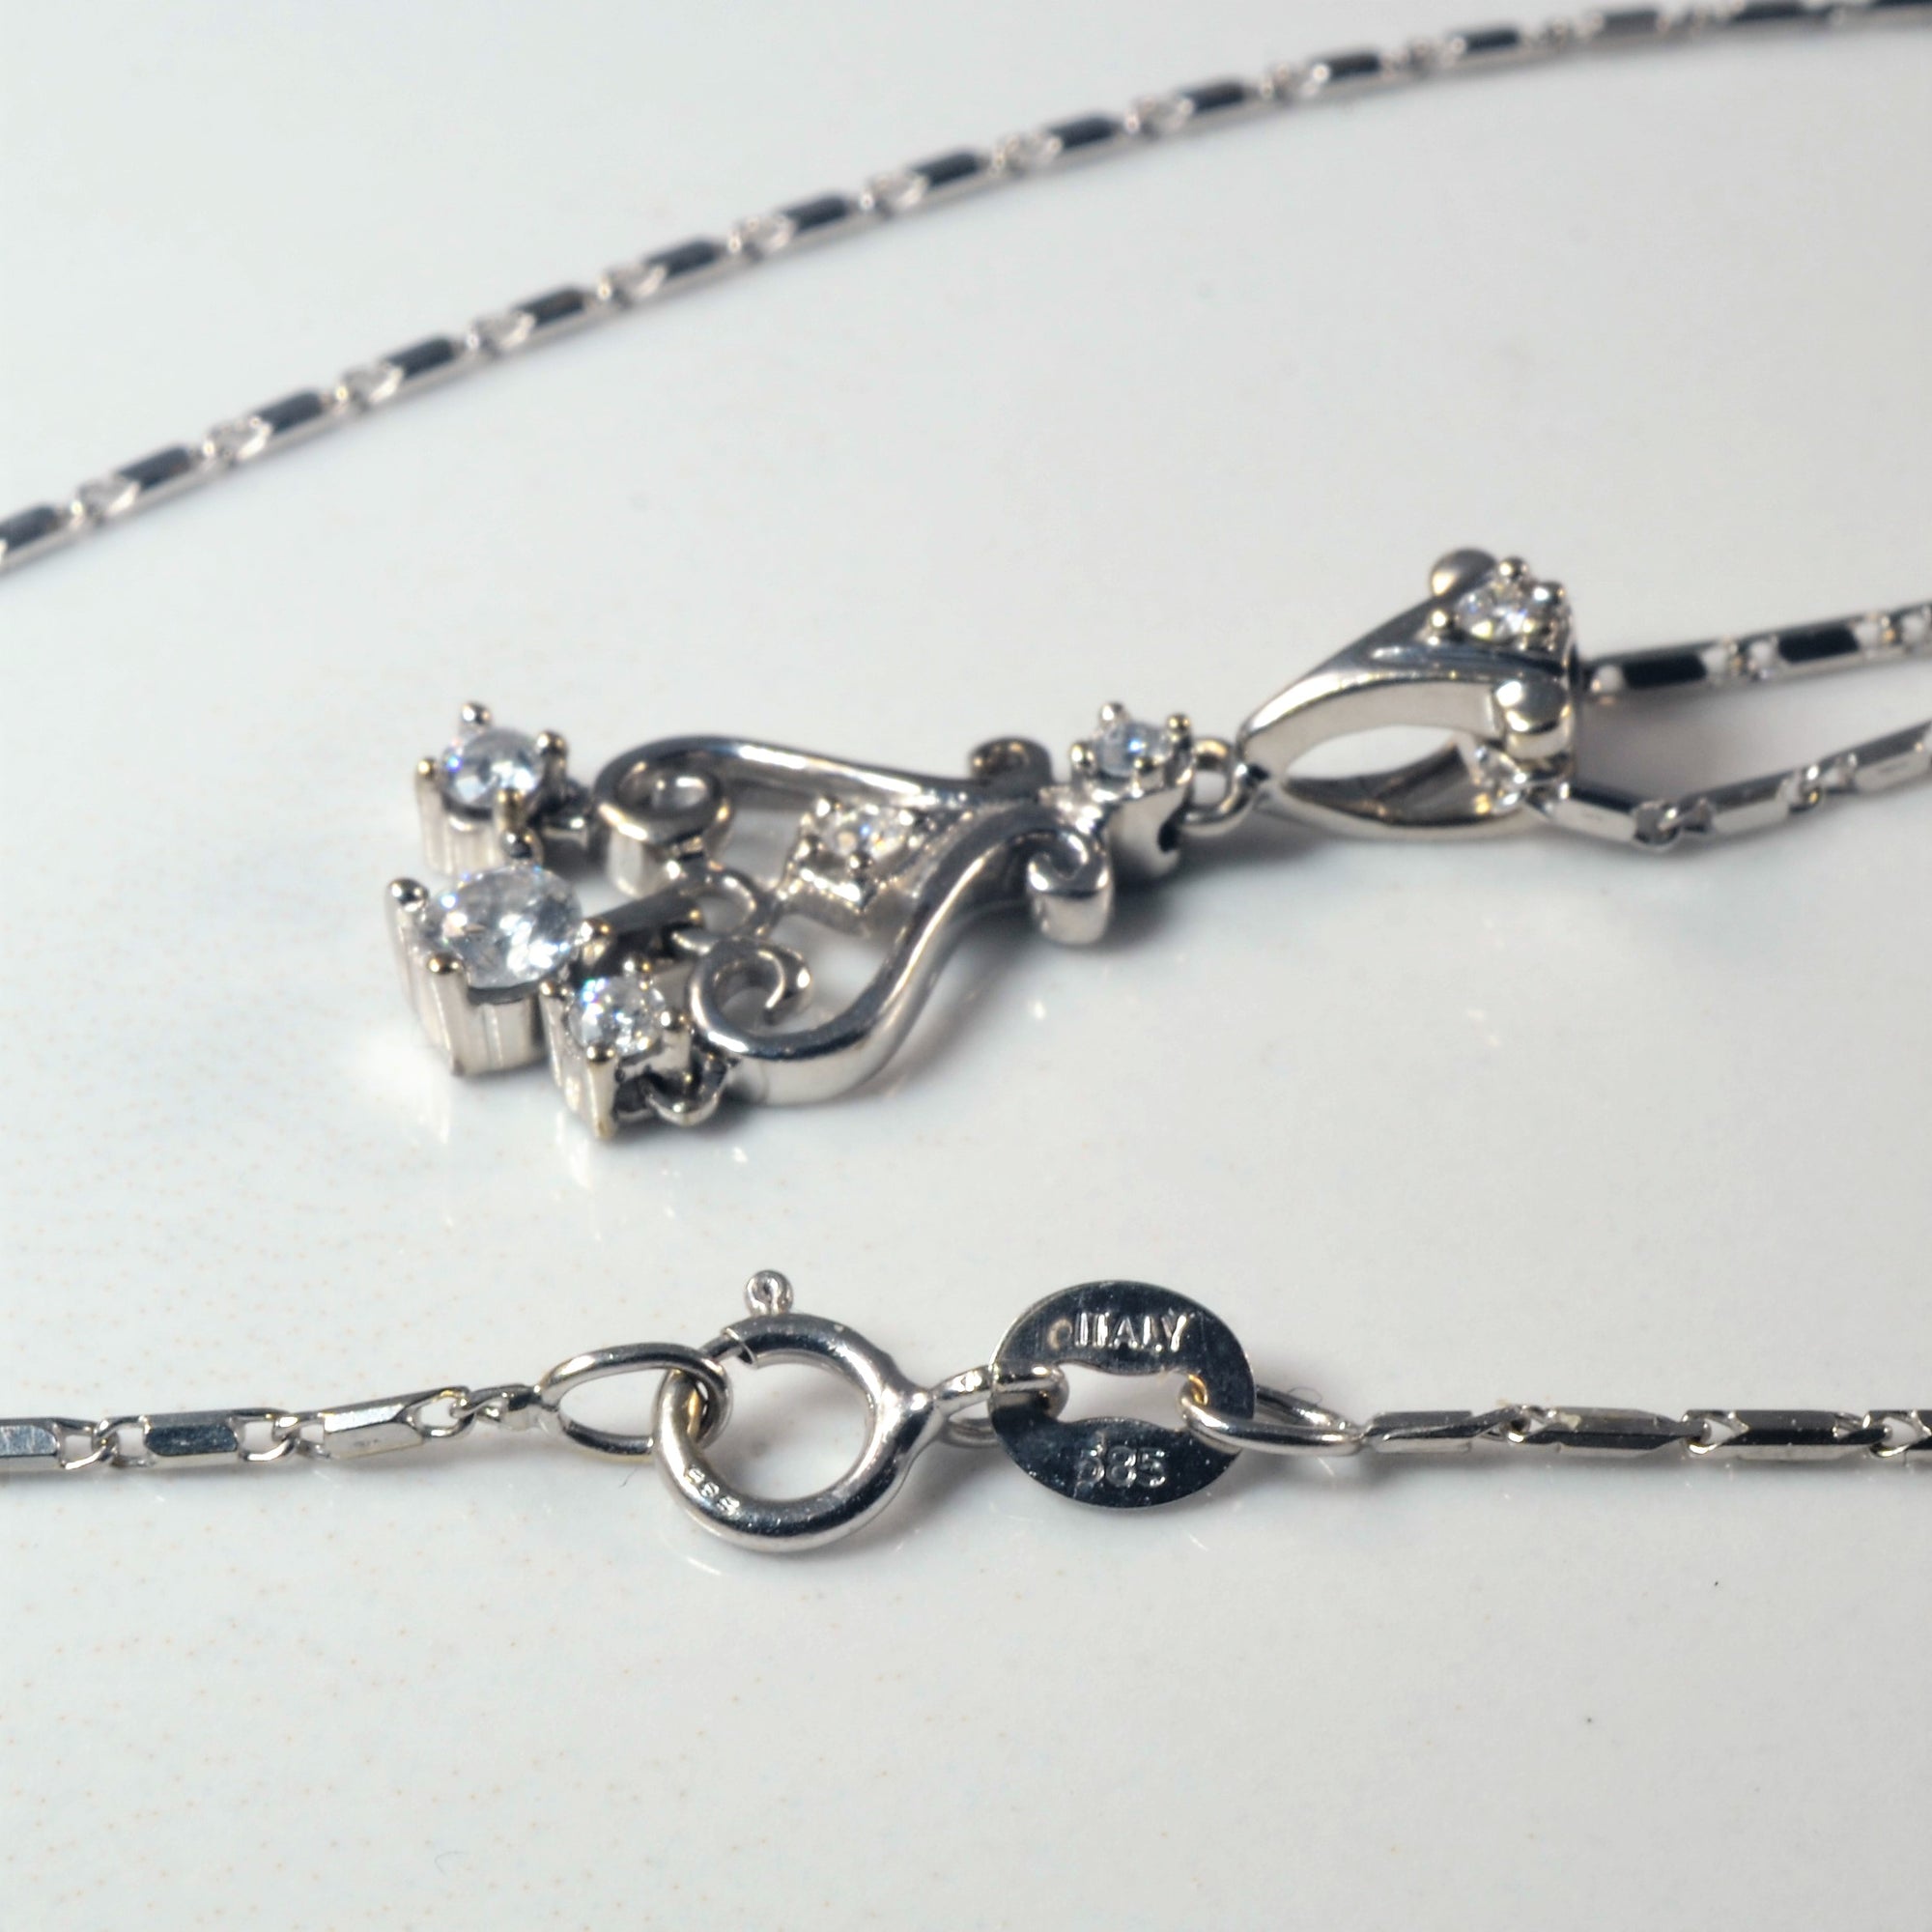 Art Deco Inspired Diamond Filigree Necklace | 0.24ctw | 16